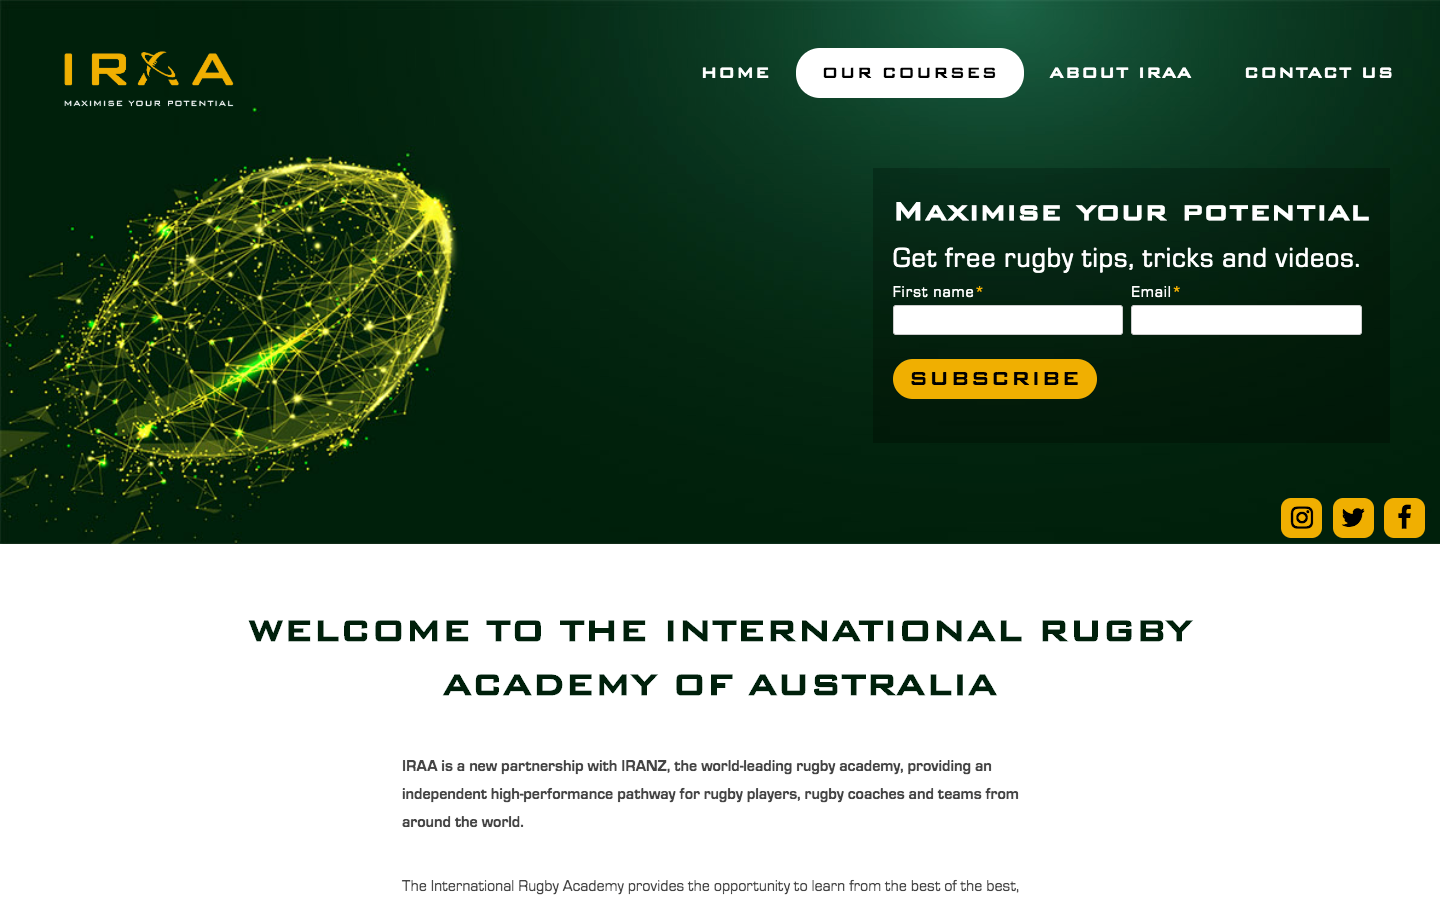 IRAA International Rugby Academy of Australia